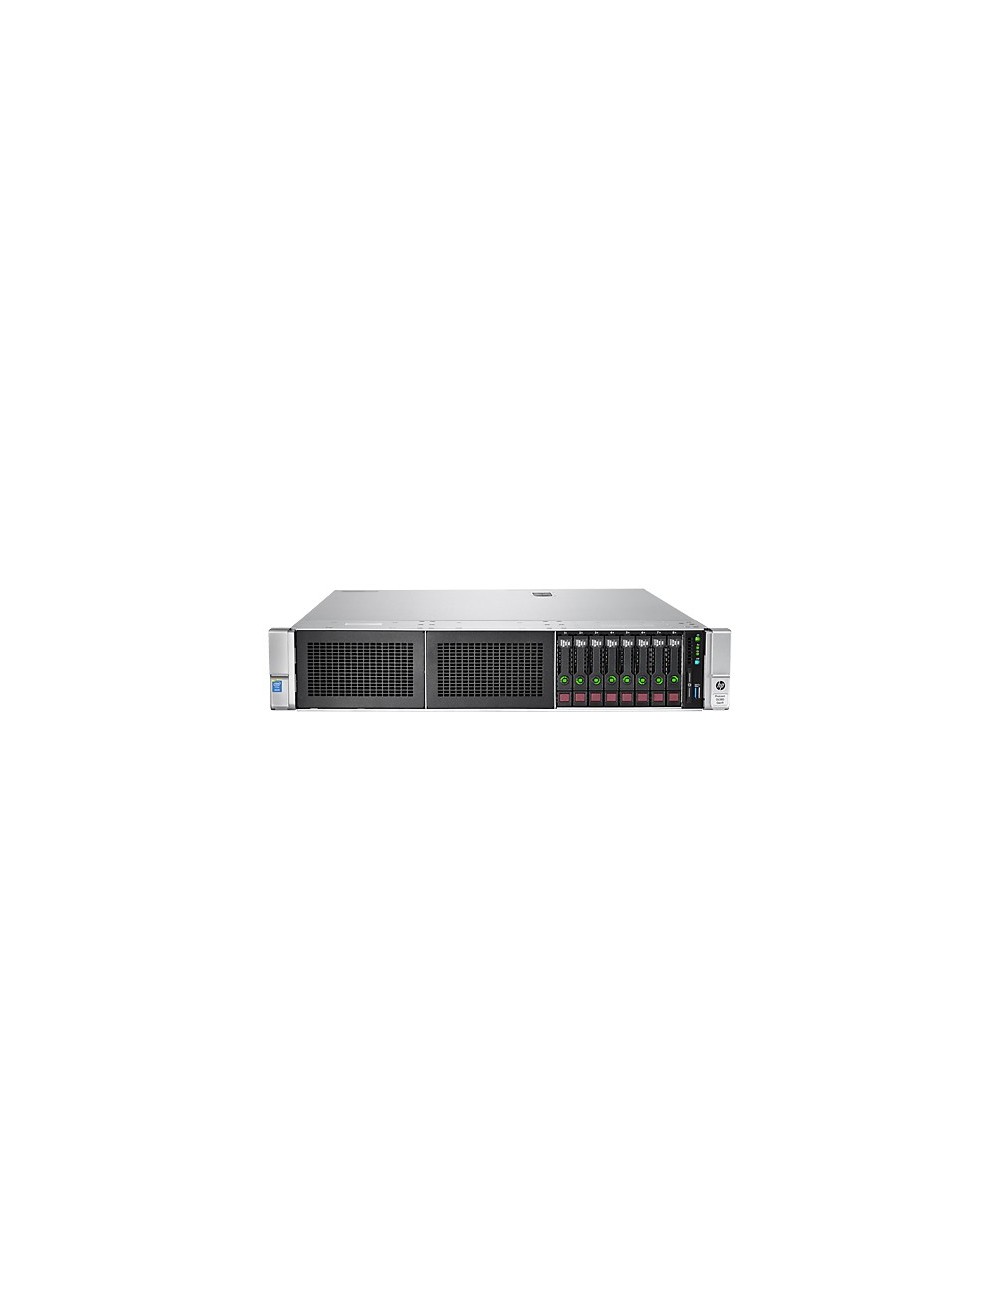 826682-B21 HPE ProLiant DL380 Gen9 2.1GHz E5-2620V4 500W Rack (2U) server